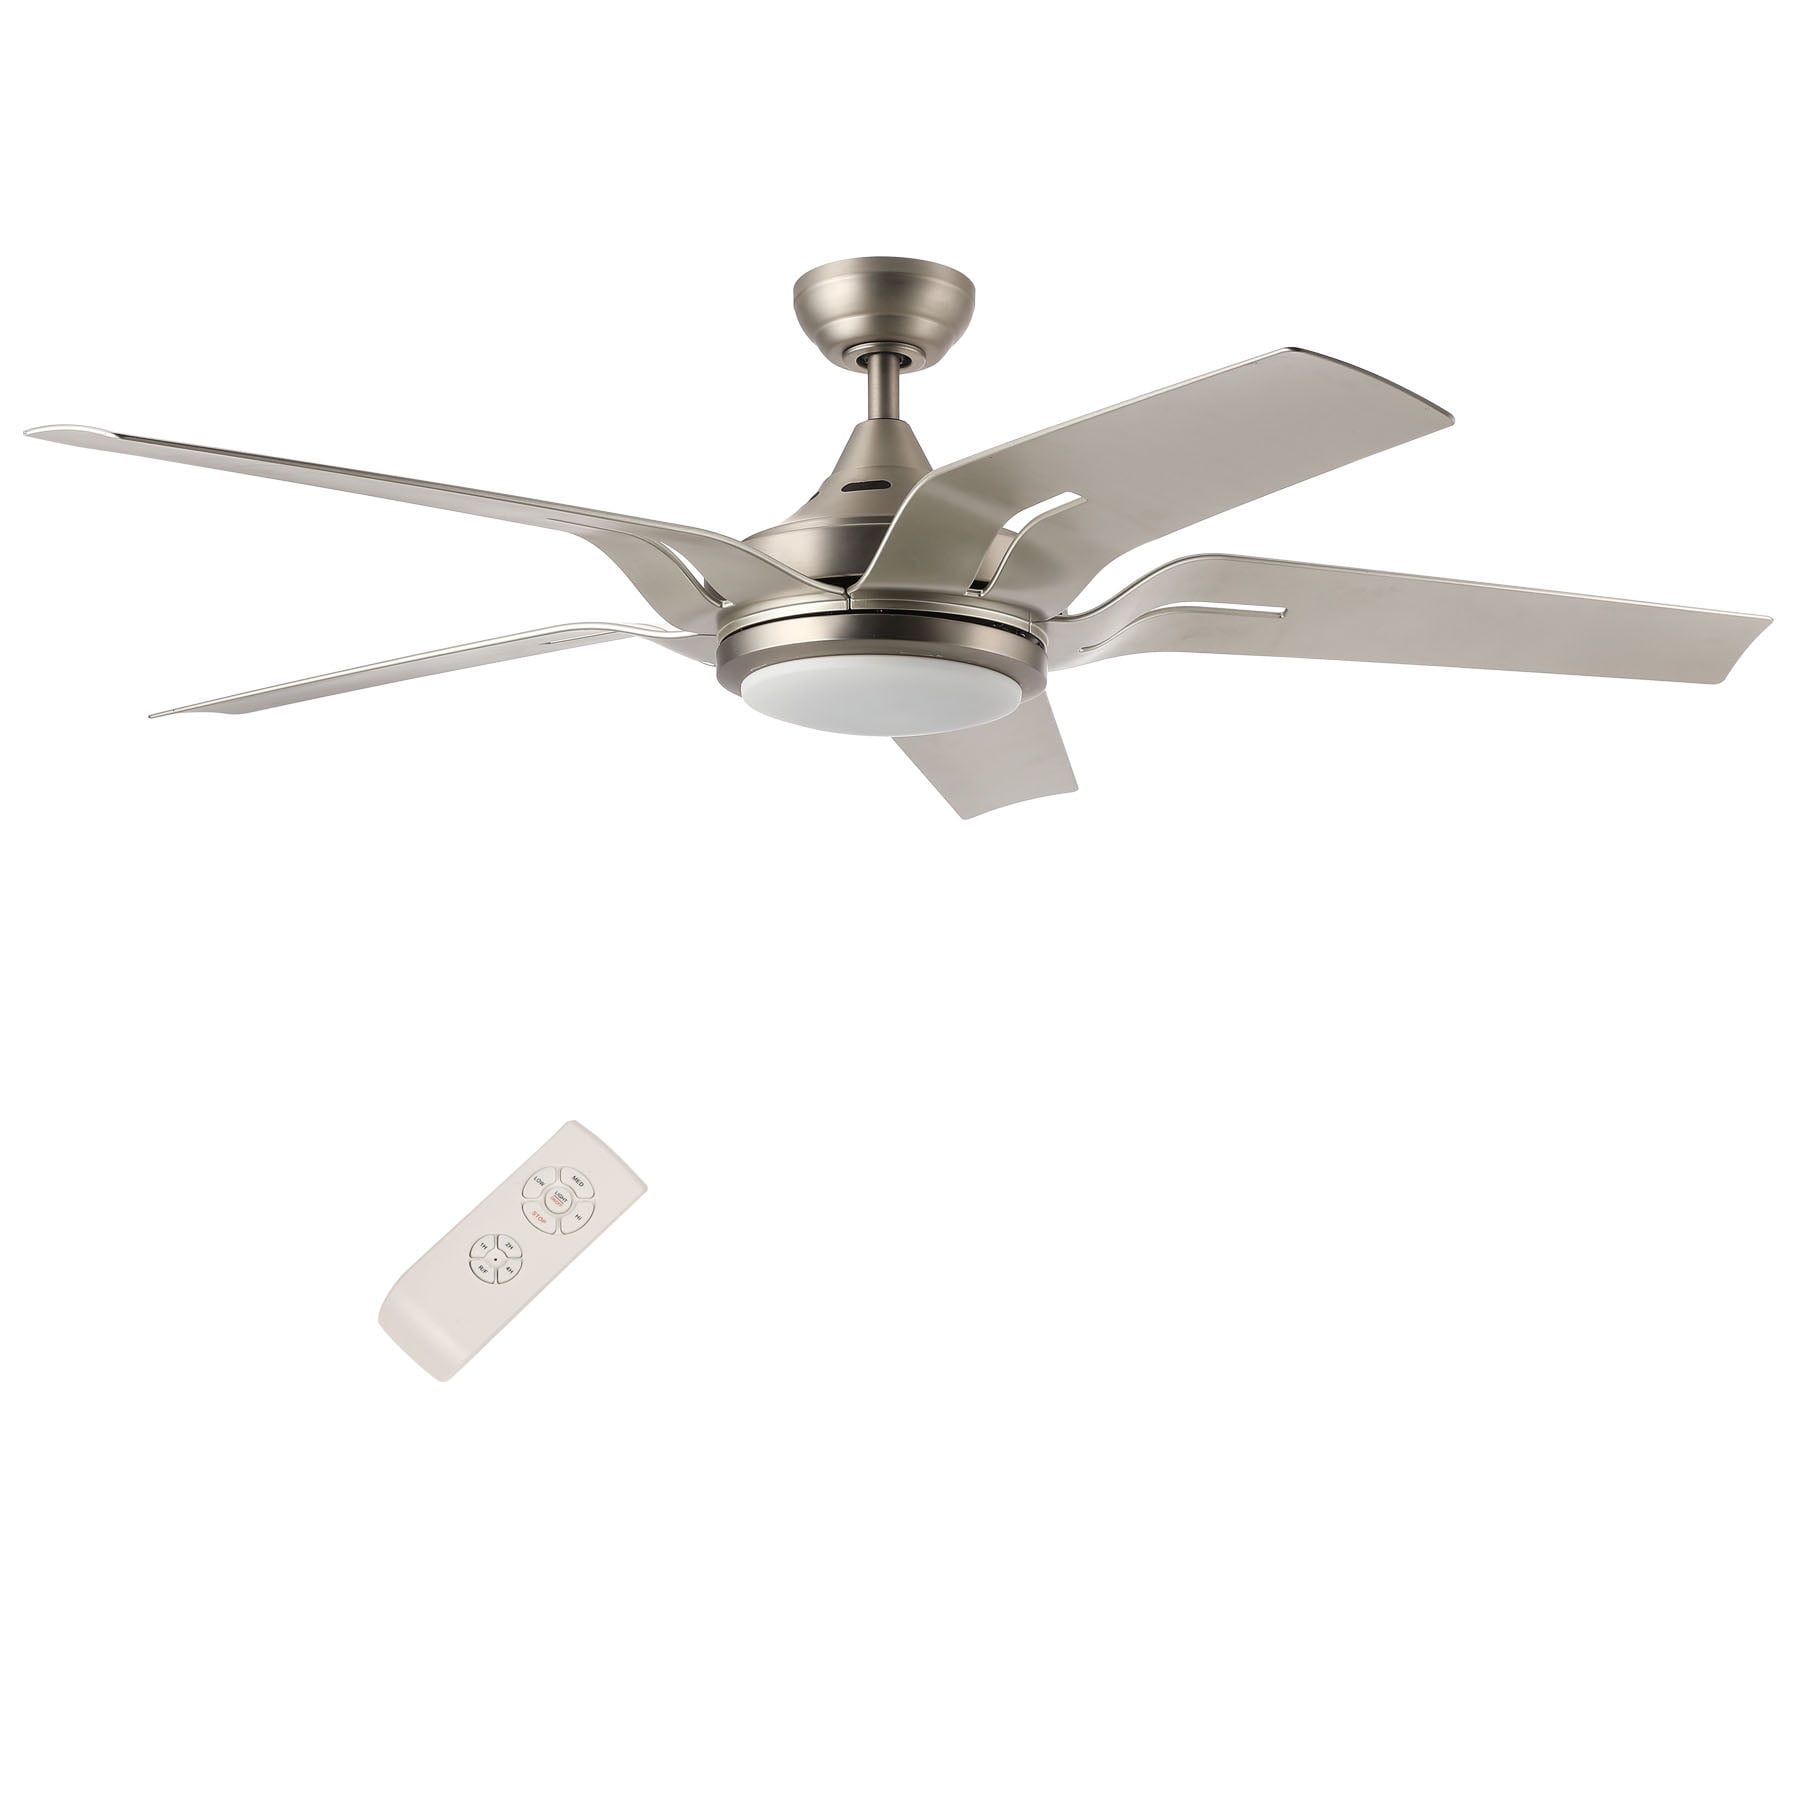 Details about   Secondhand 56” Ceiling Fan 5 Blades Silver Steel LED Light Remote 3 Color Temp 